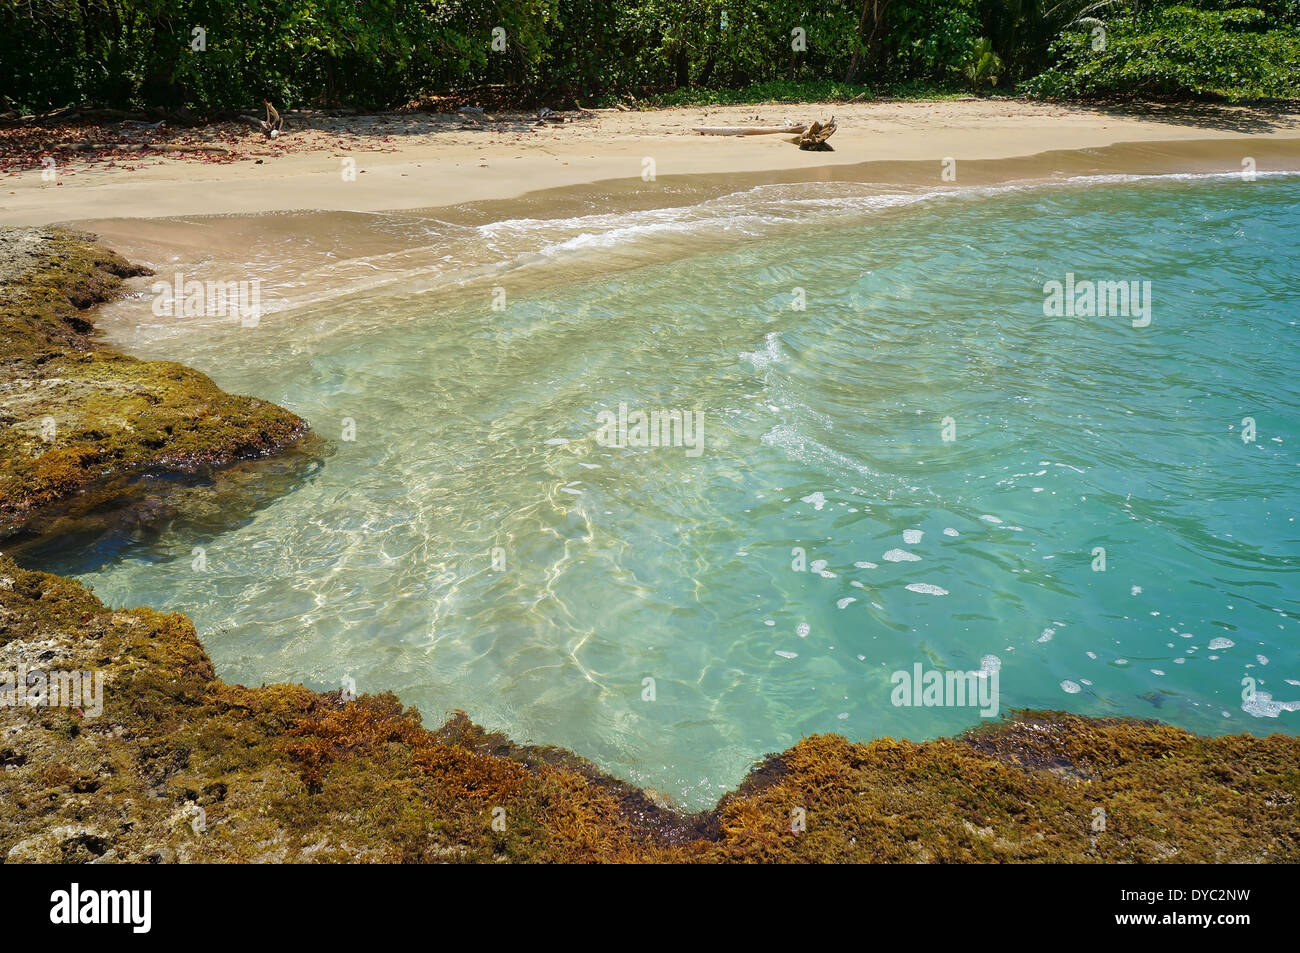 Tropical beach with natural pool in the Caribbean sea, playa Chiquita, Puerto Viejo de Talamanca, Costa Rica Stock Photo